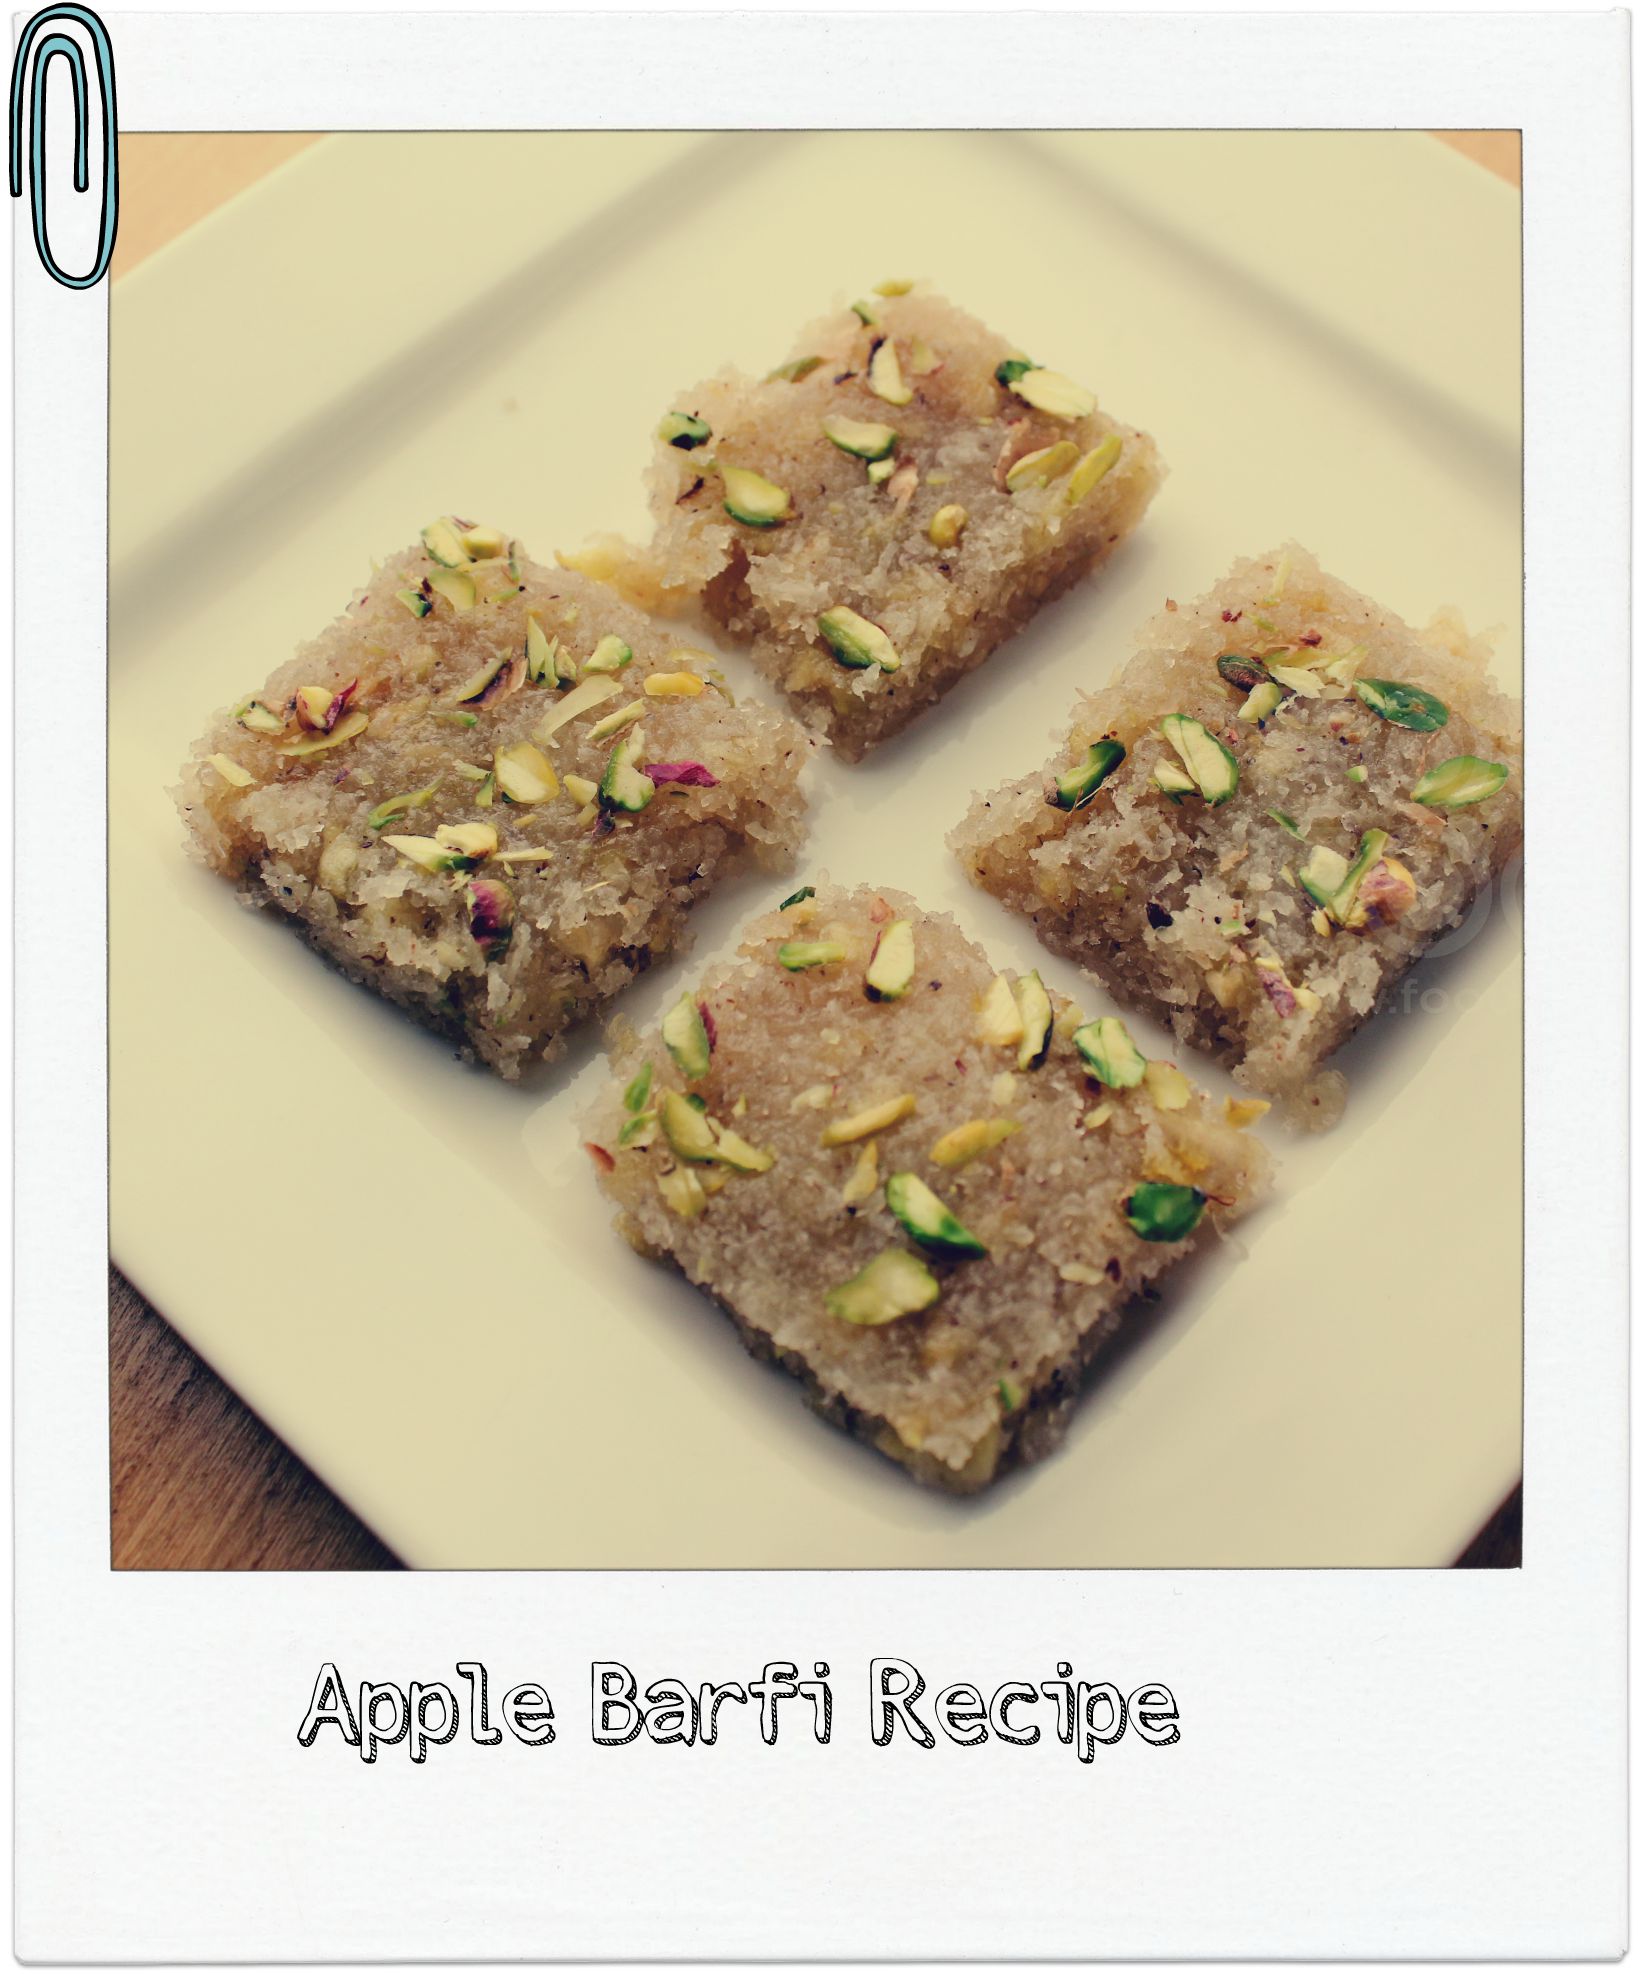 Apple Barfi recipe